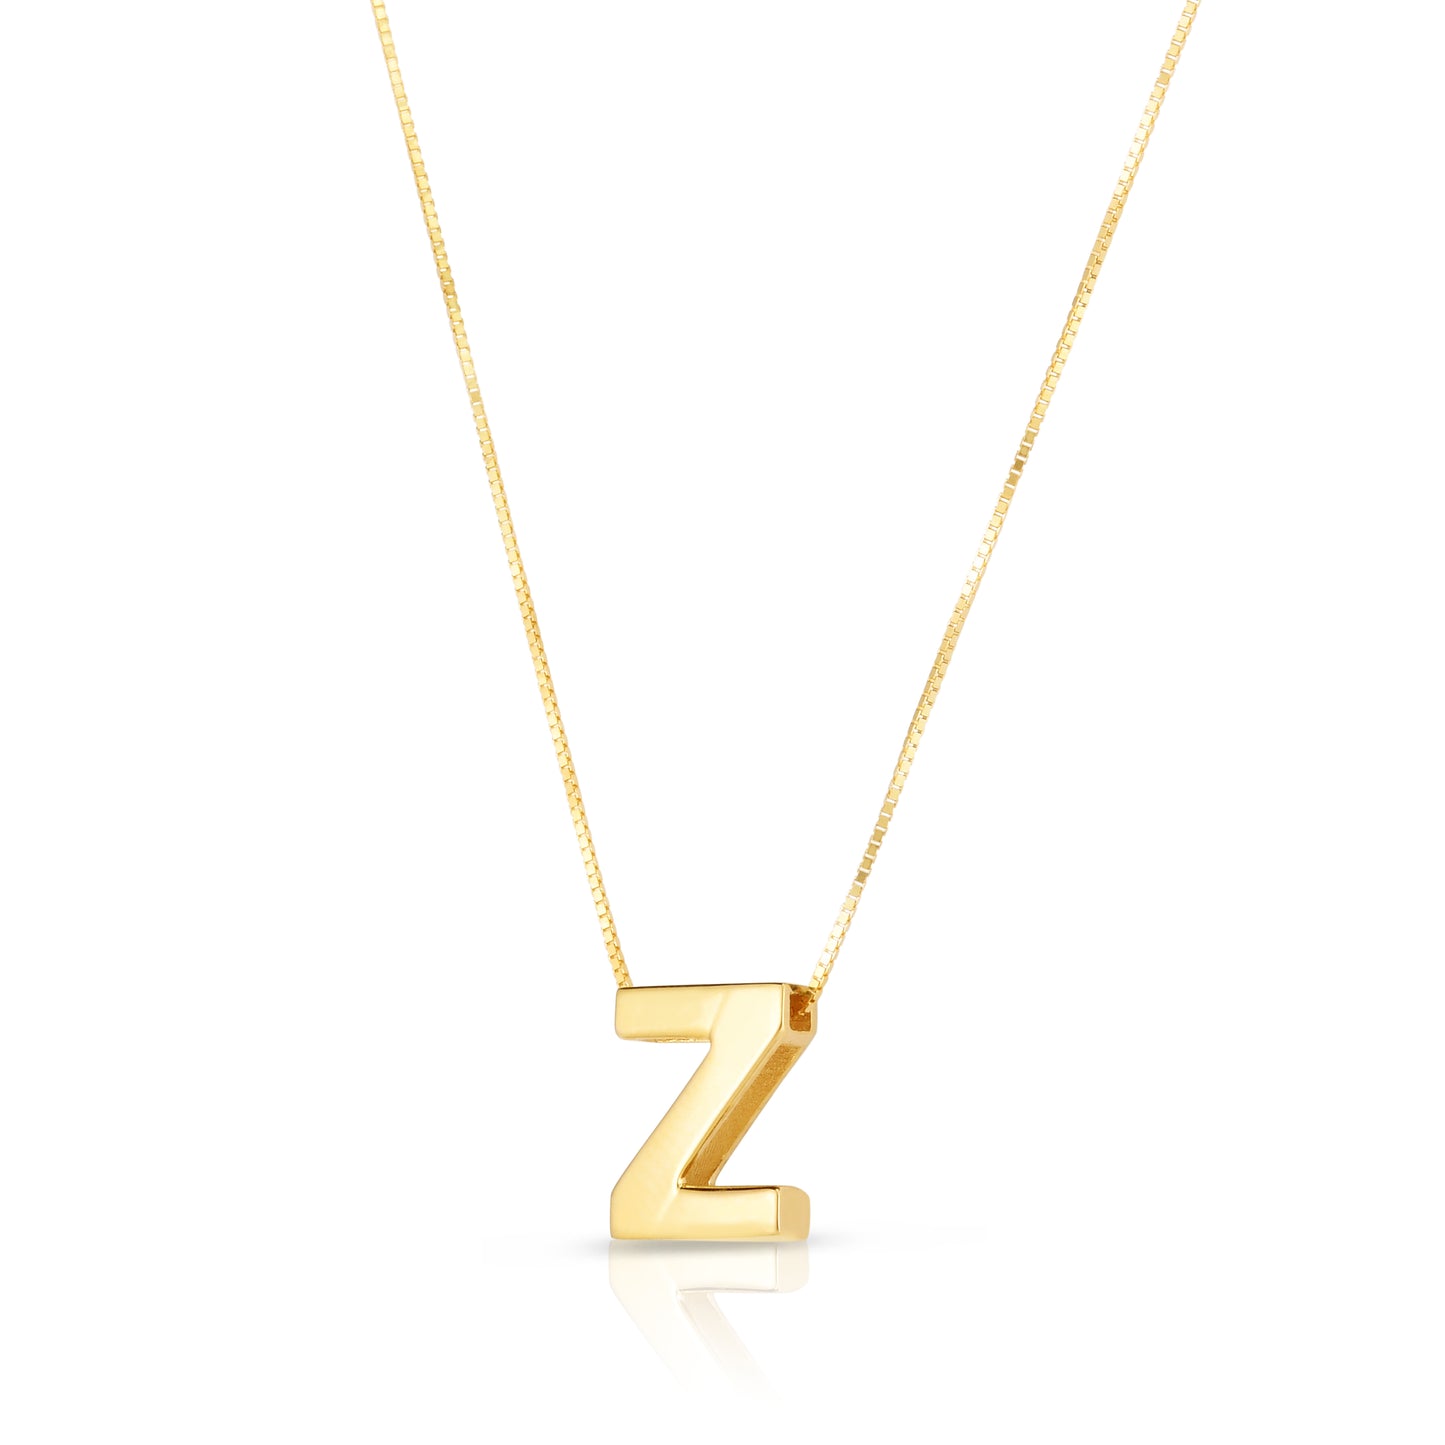 14K Gold Block Letter Initial Z Necklace